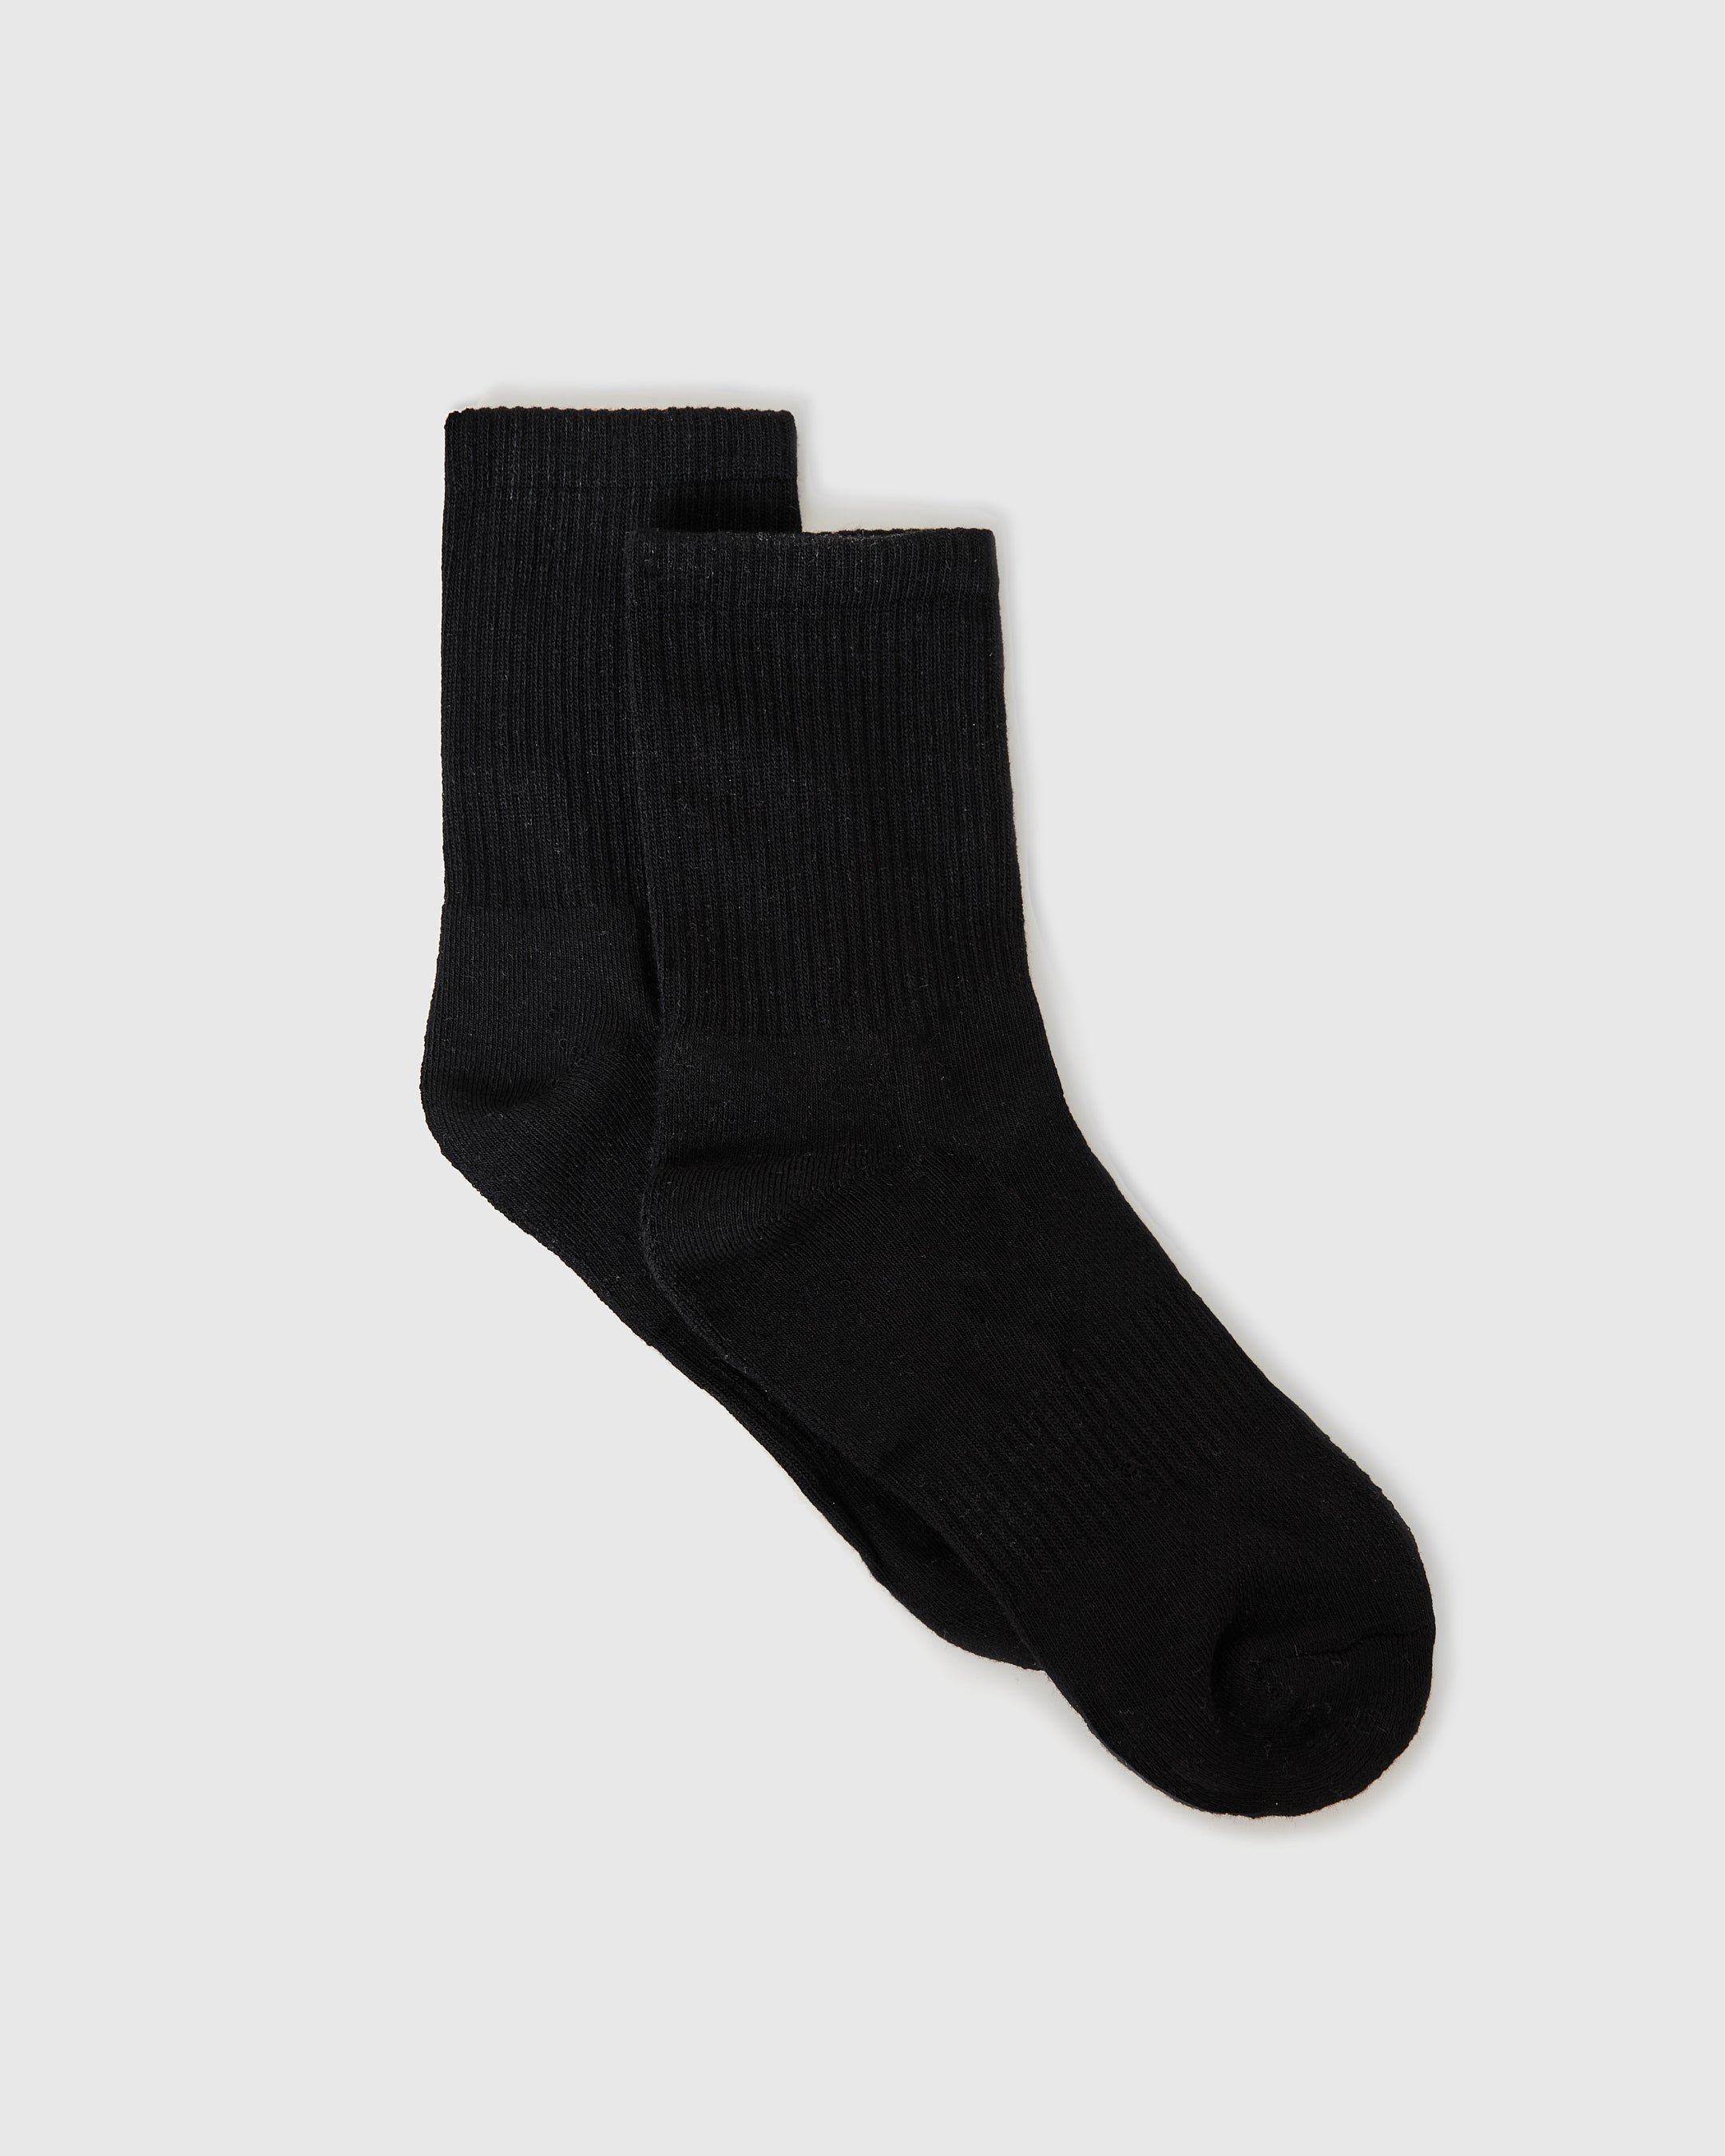 Black Half Crew Socks 12-Pack